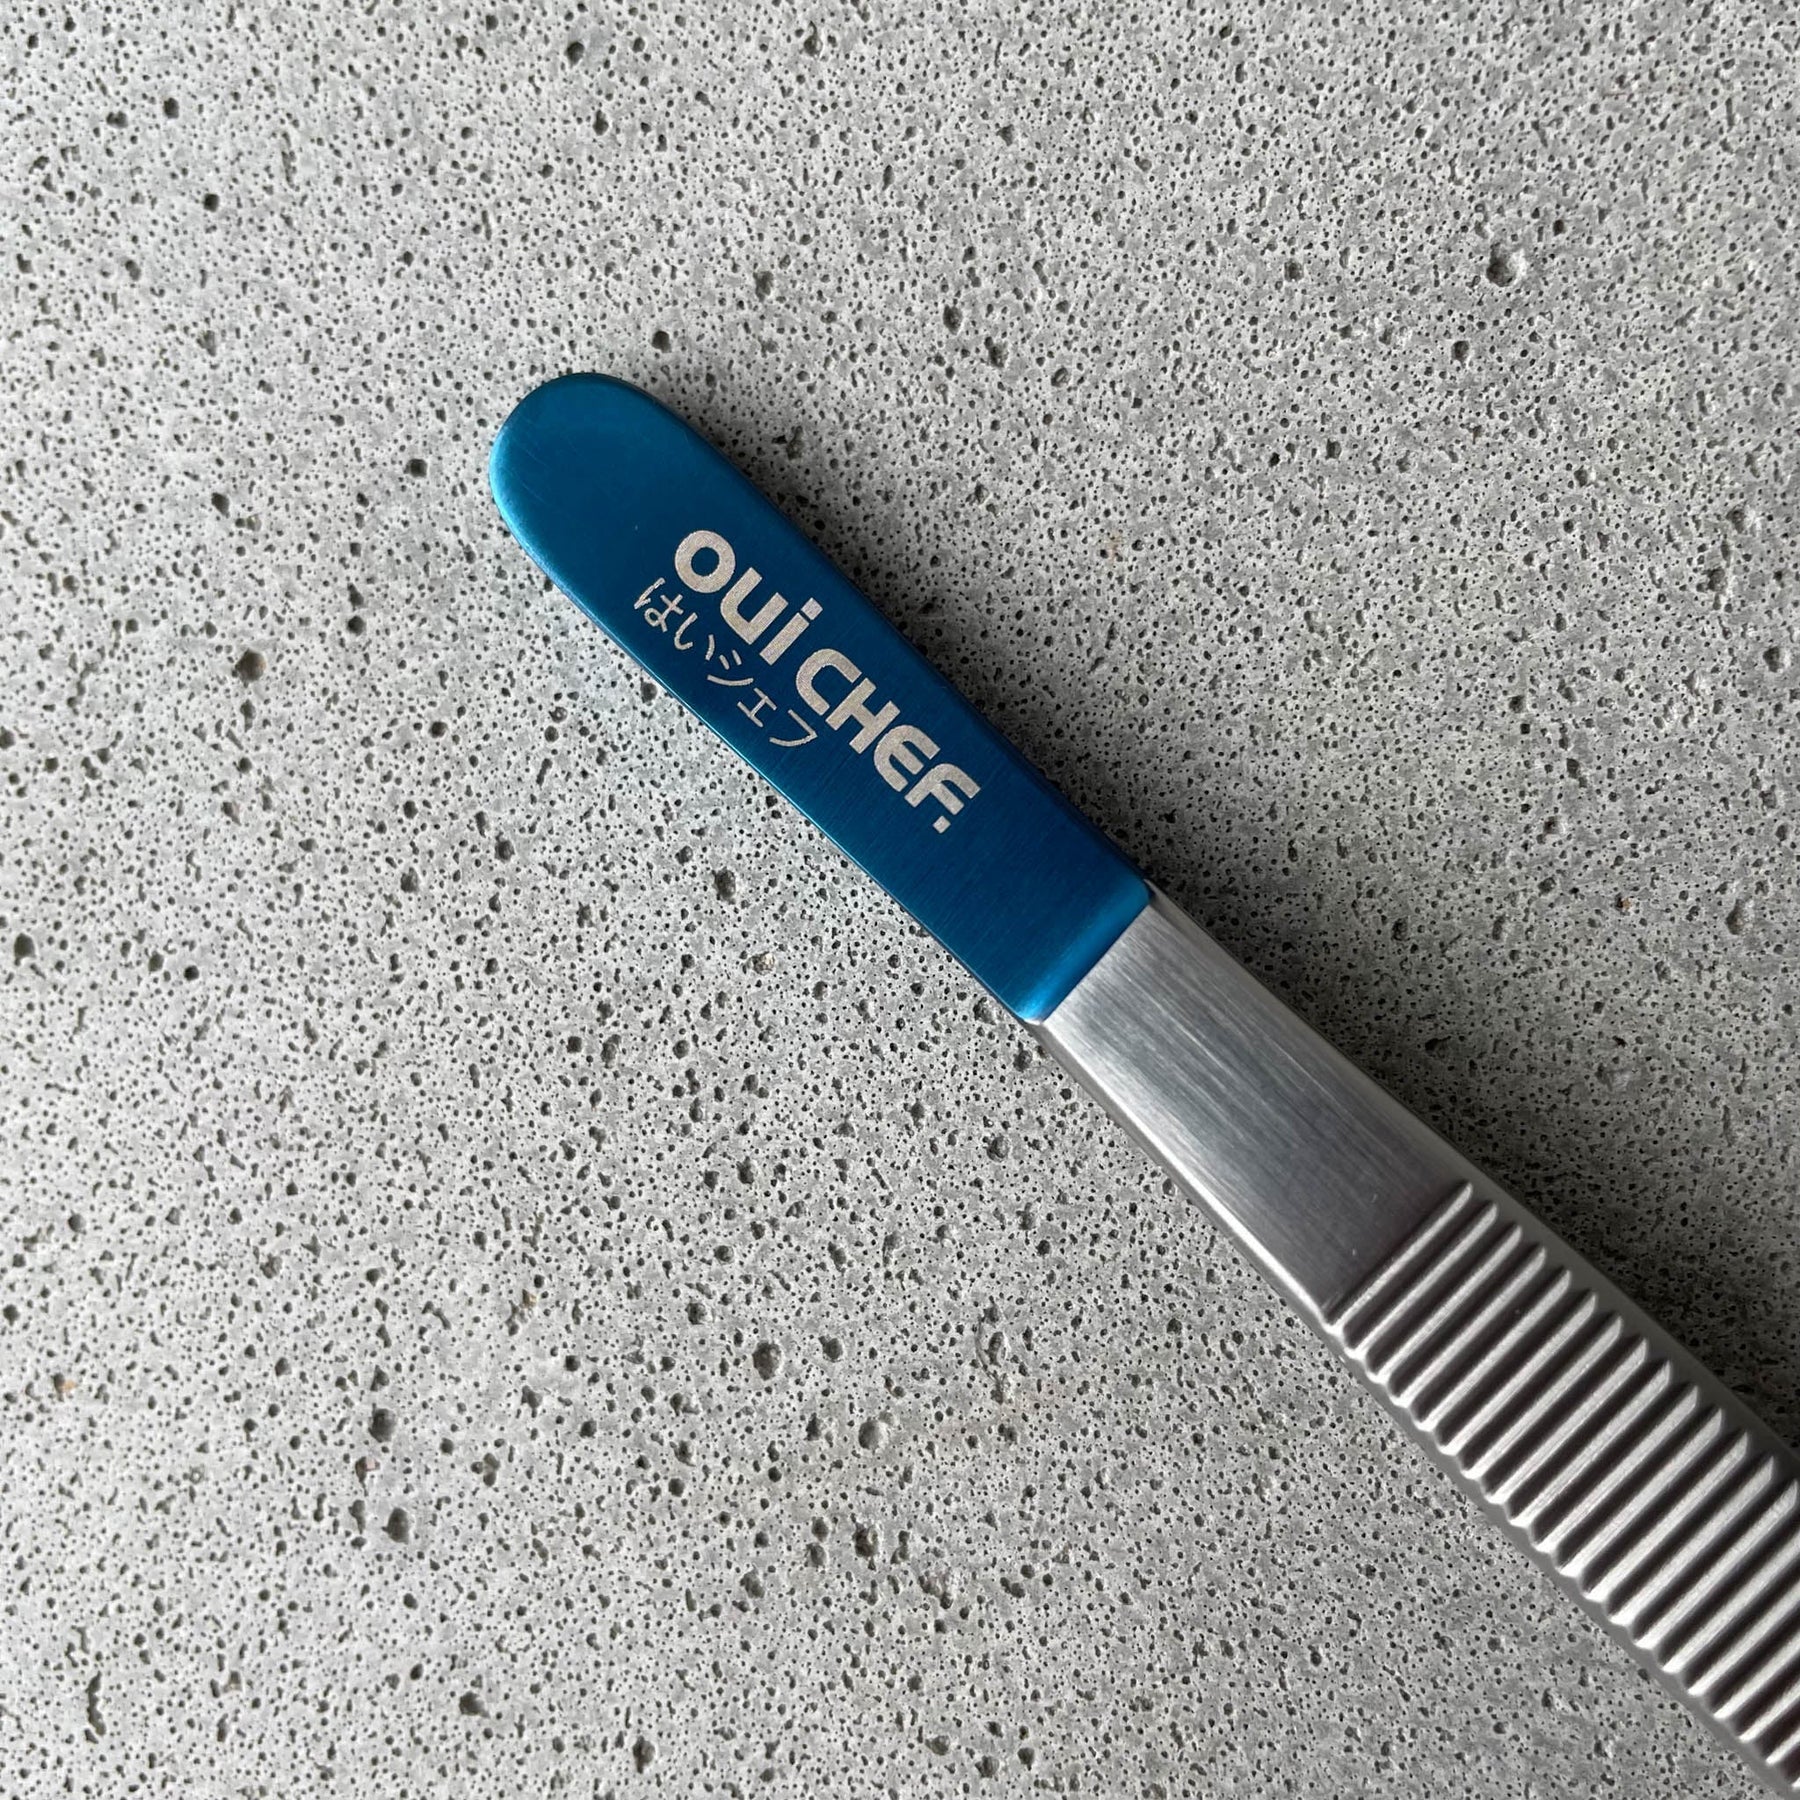 SALE - High Precision Straight Regular Chef's Tweezers (Medium - 20cm/7.87")